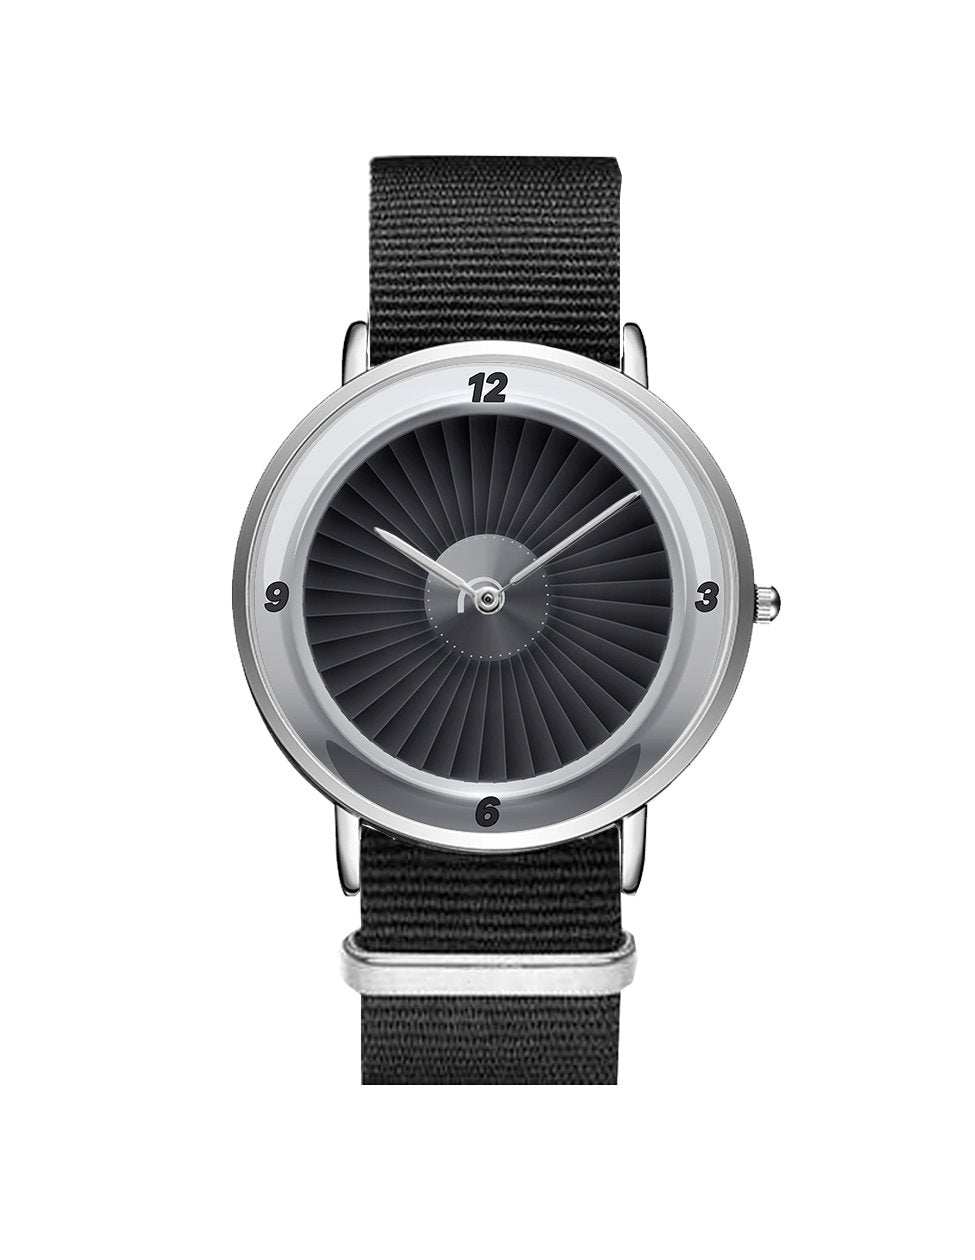 Jet Engine Designed Leather Strap Watches Pilot Eyes Store Silver & Black Nylon Strap 